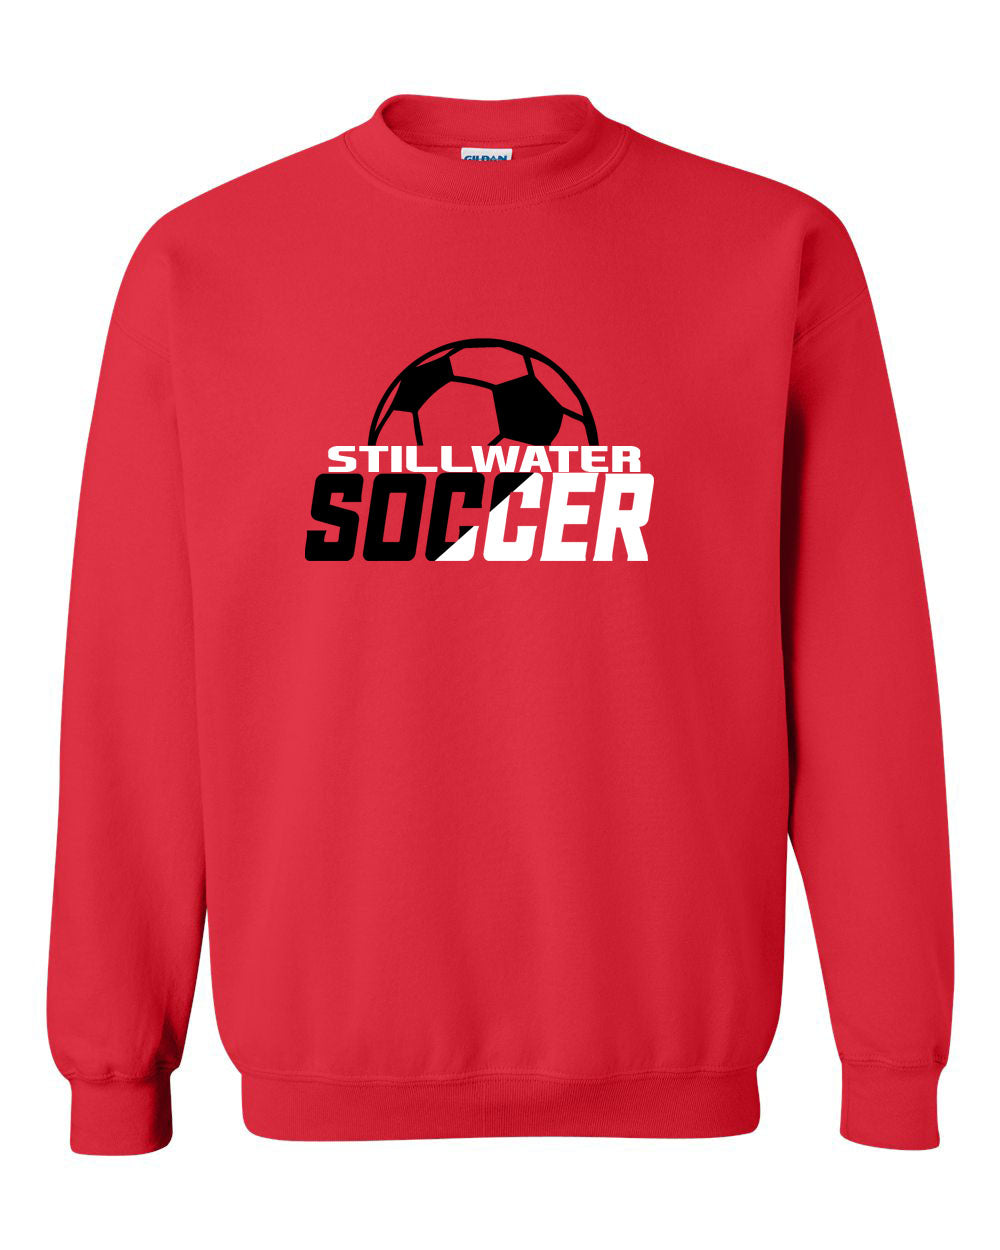 Stillwater Soccer Design 1 non hooded sweatshirt